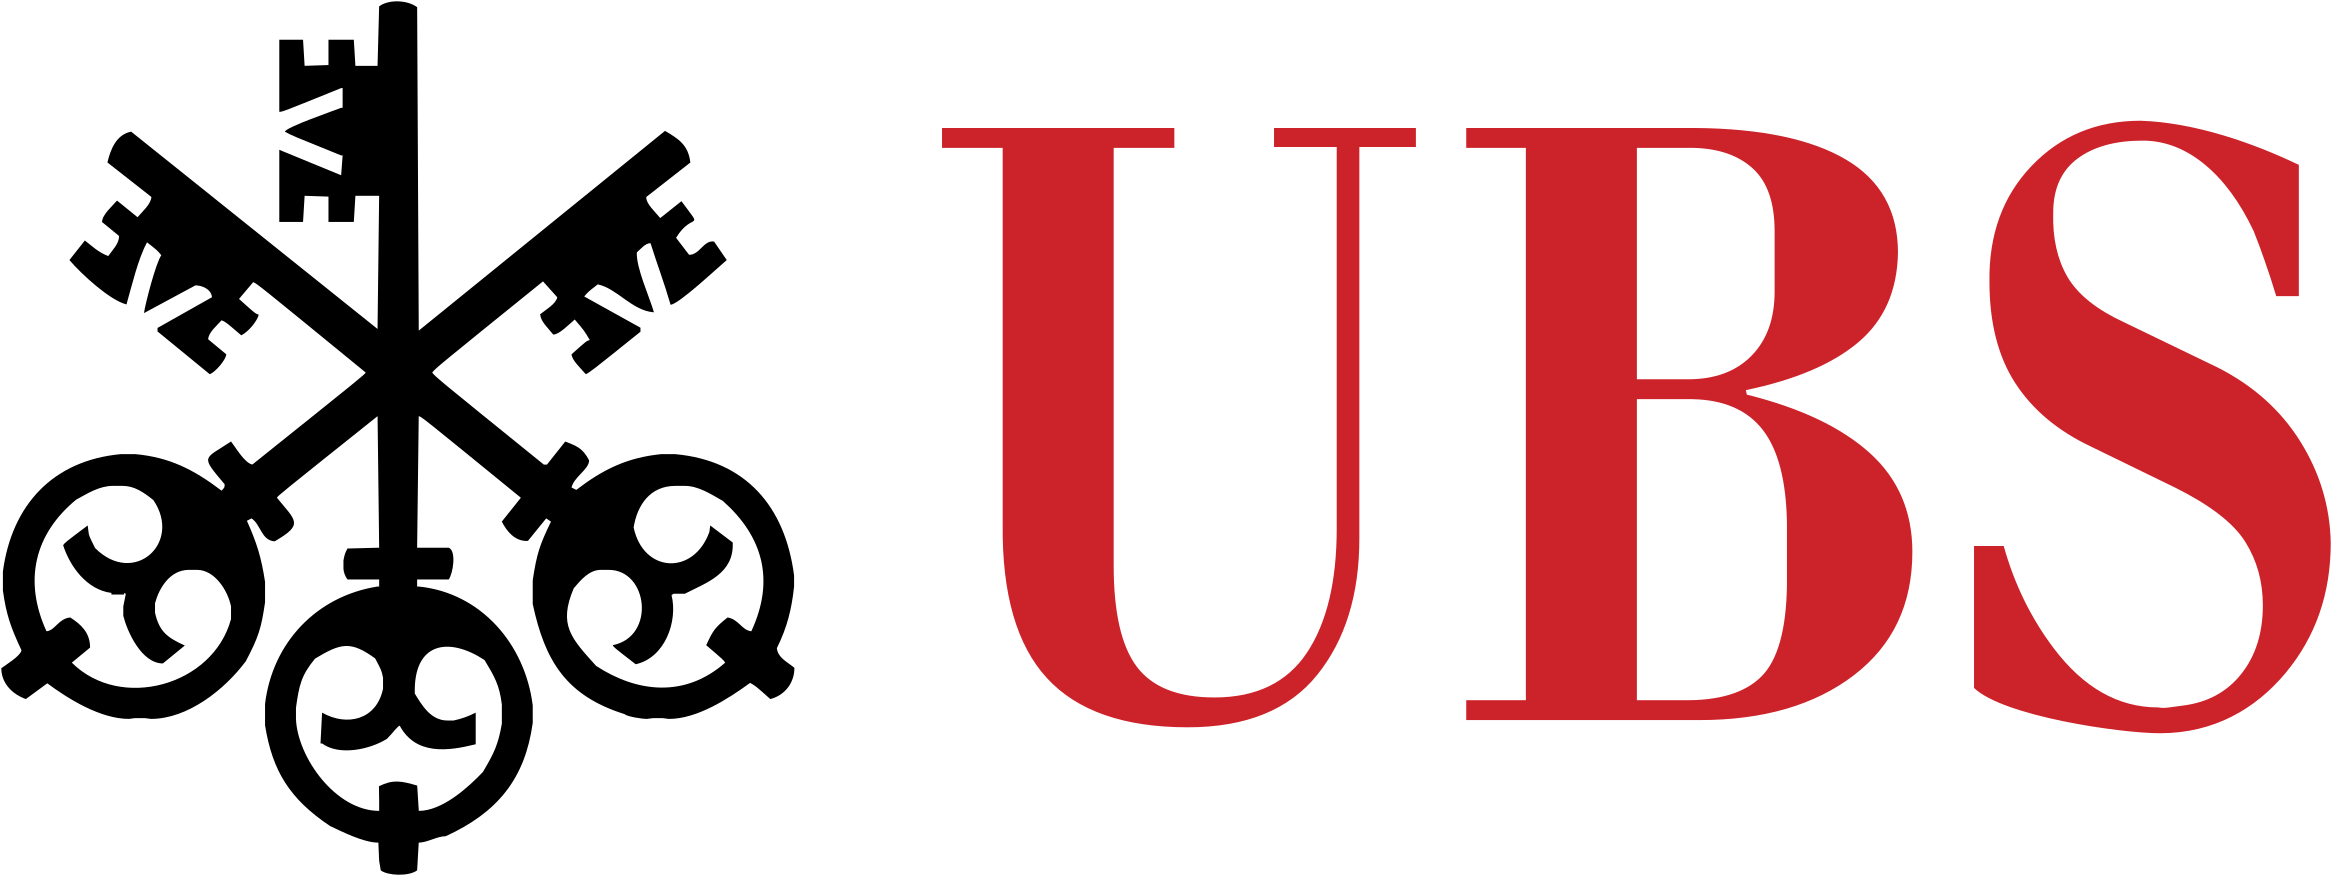 389 3897797 ubs logo png transparent ubs optimus foundation logo